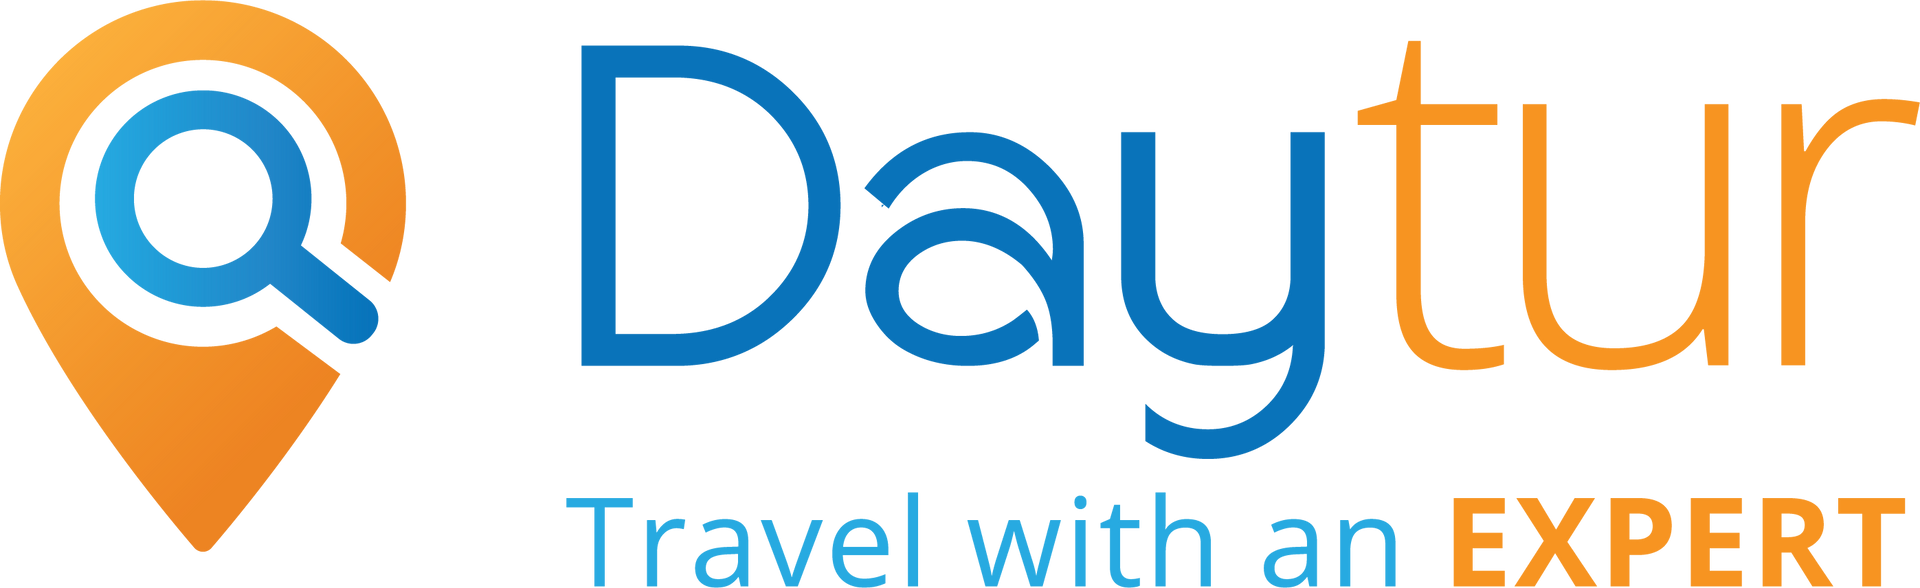 tourist places in dubai for free